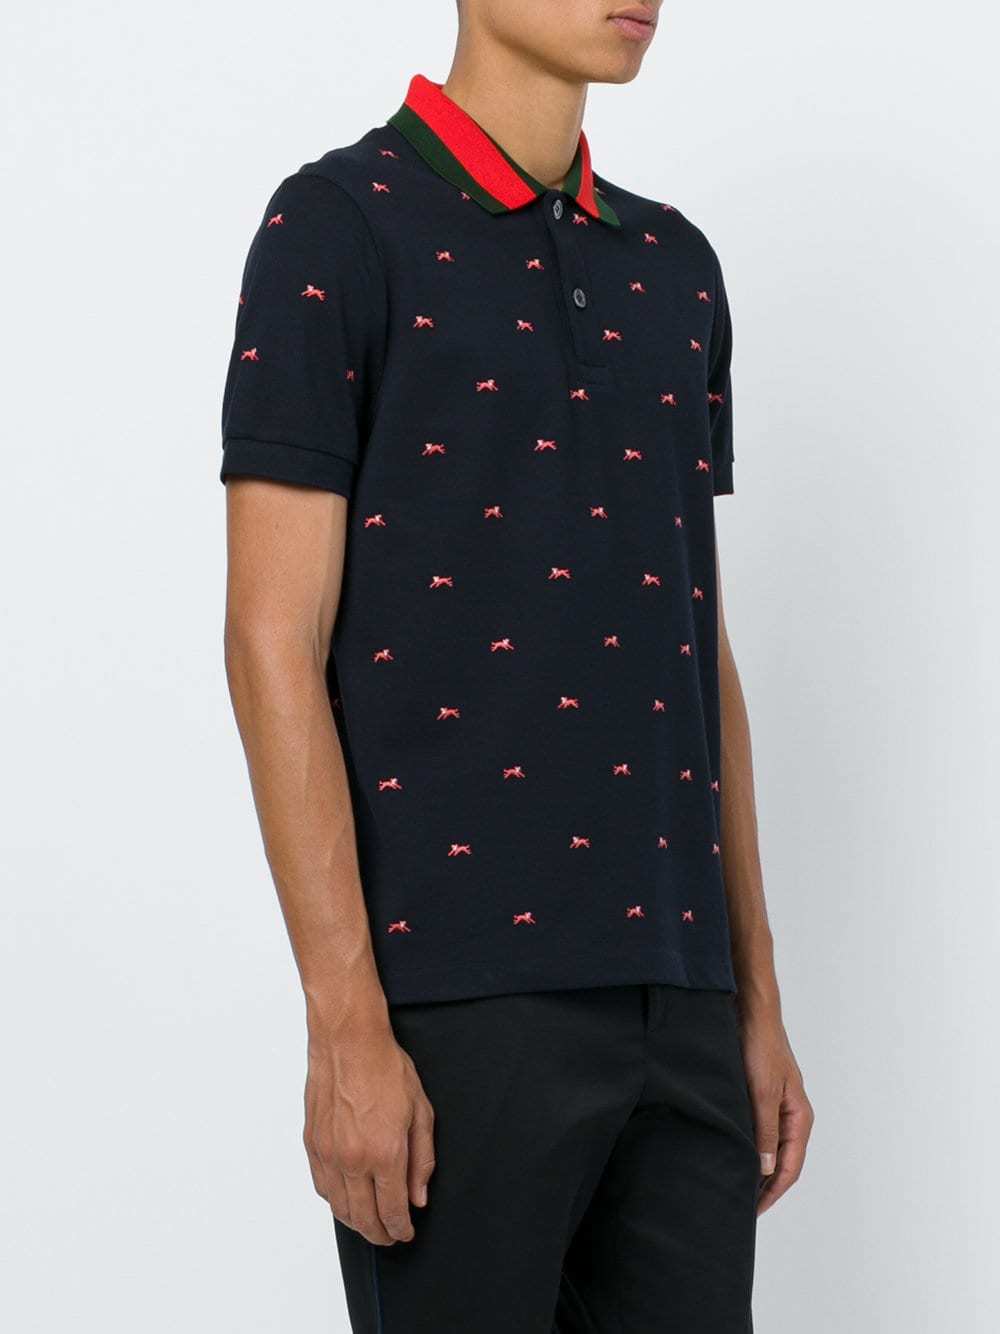 Gucci Polo Shirt, $577 farfetch.com |